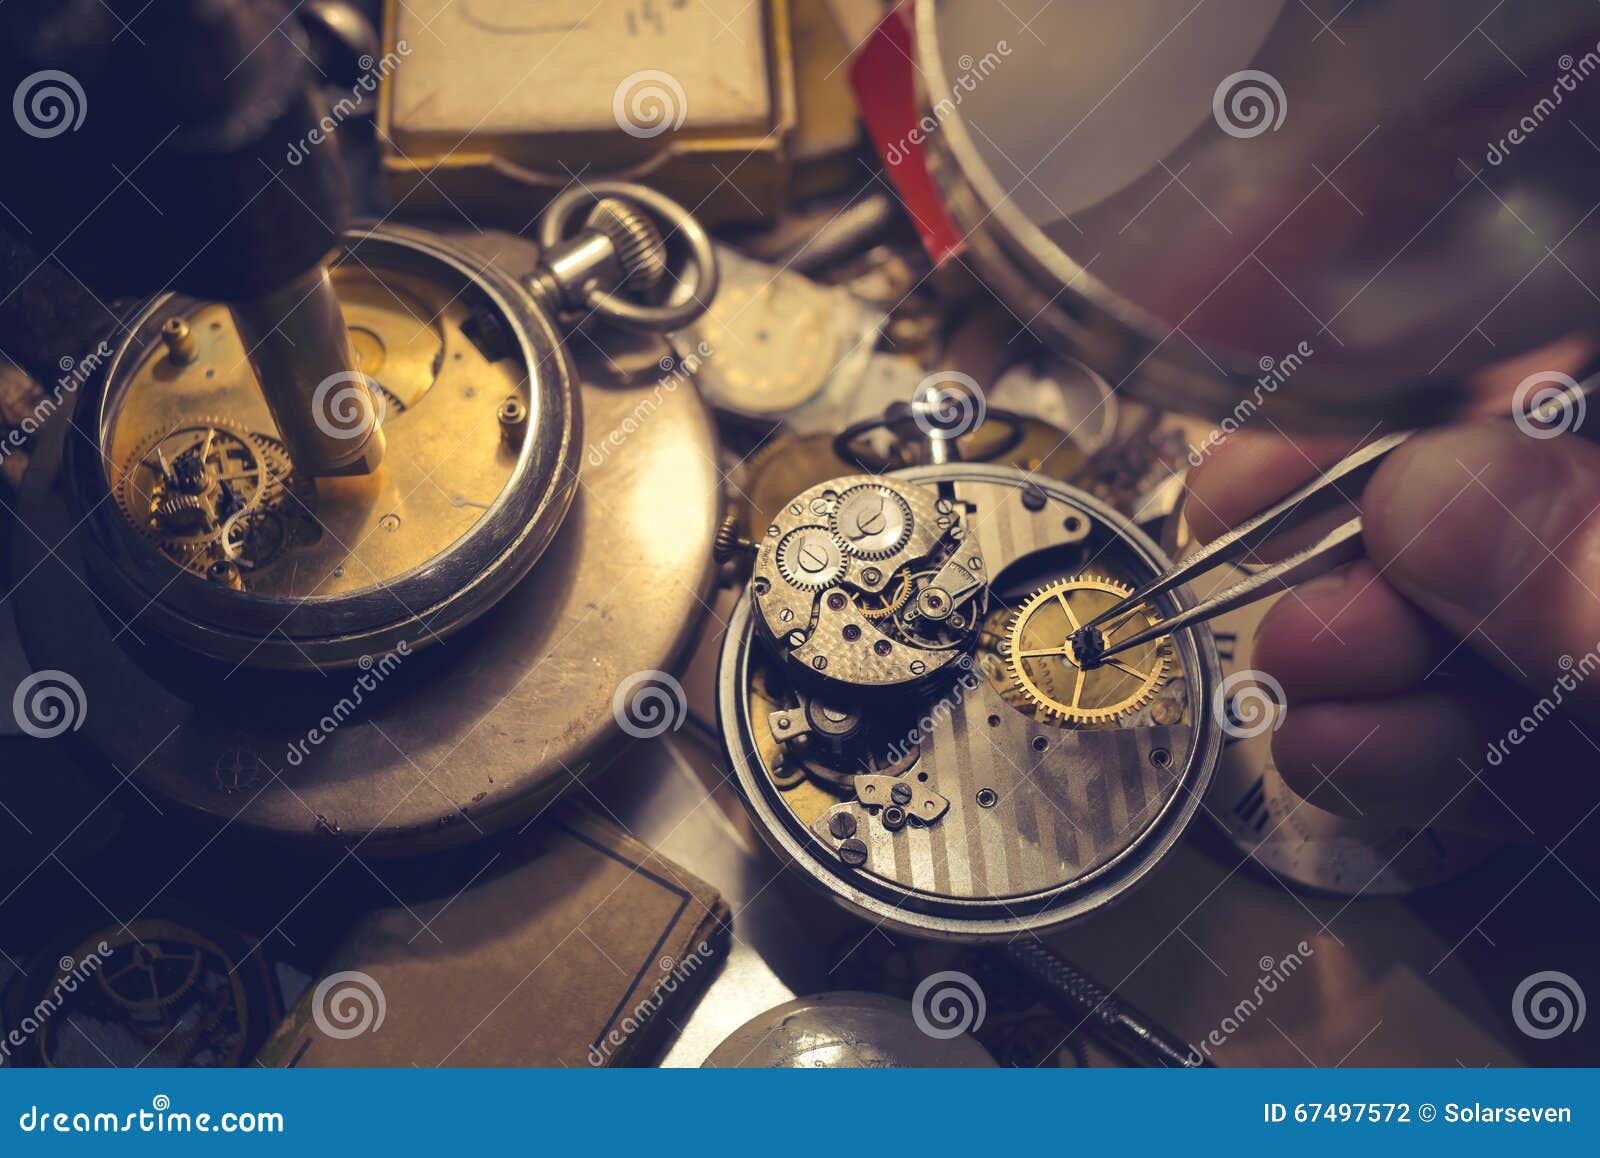 watchmakers craftmanship